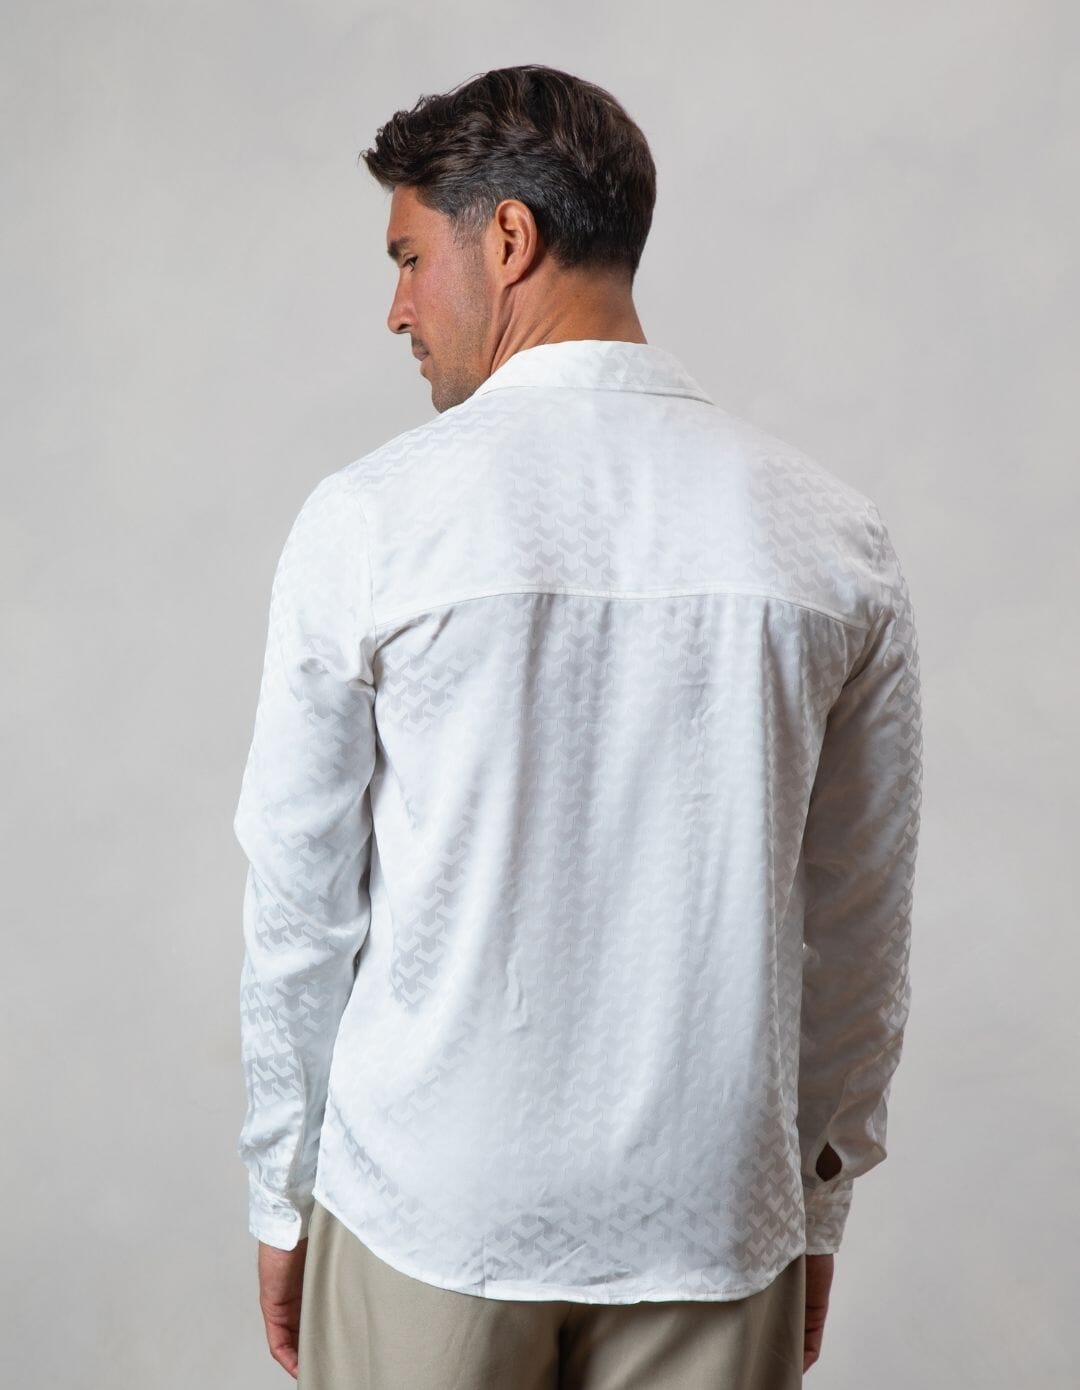 Jacquard White Illusion Shirt